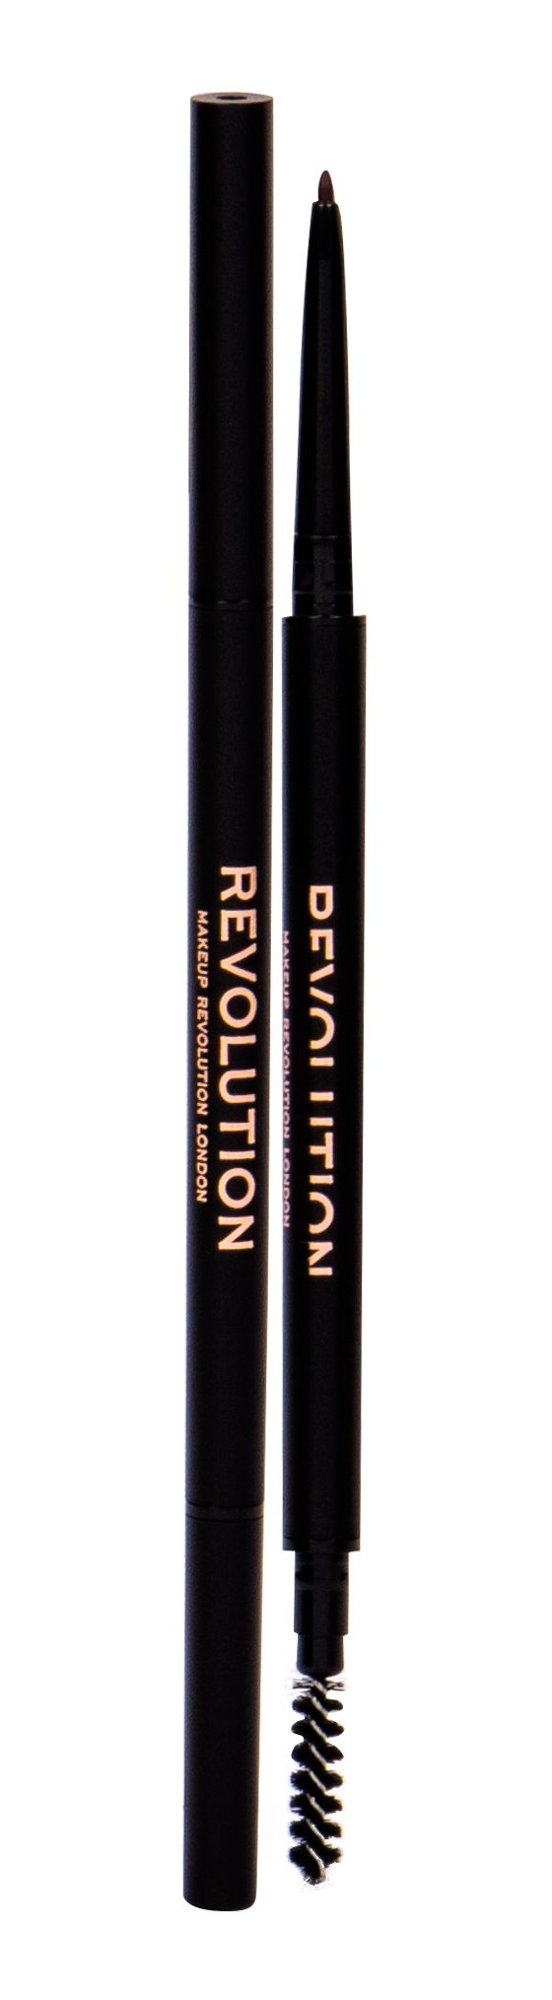 Makeup Revolution London Precise Brow Pencil